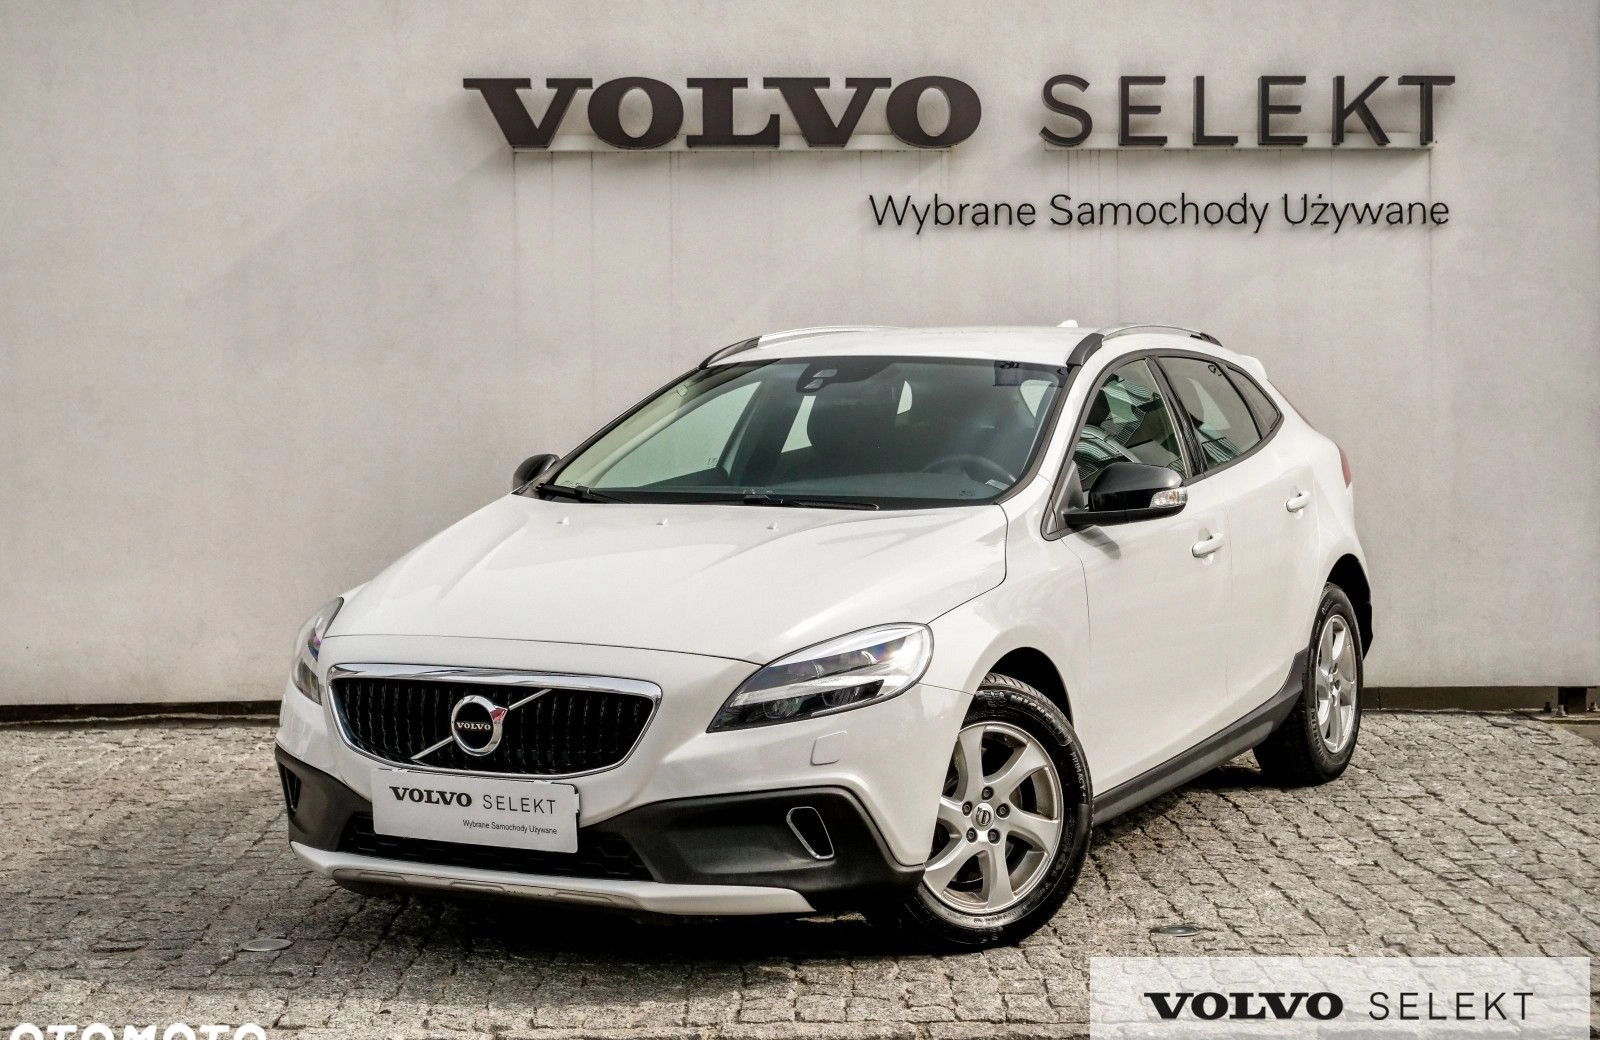 serock Volvo V40 cena 87900 przebieg: 92080, rok produkcji 2019 z Serock